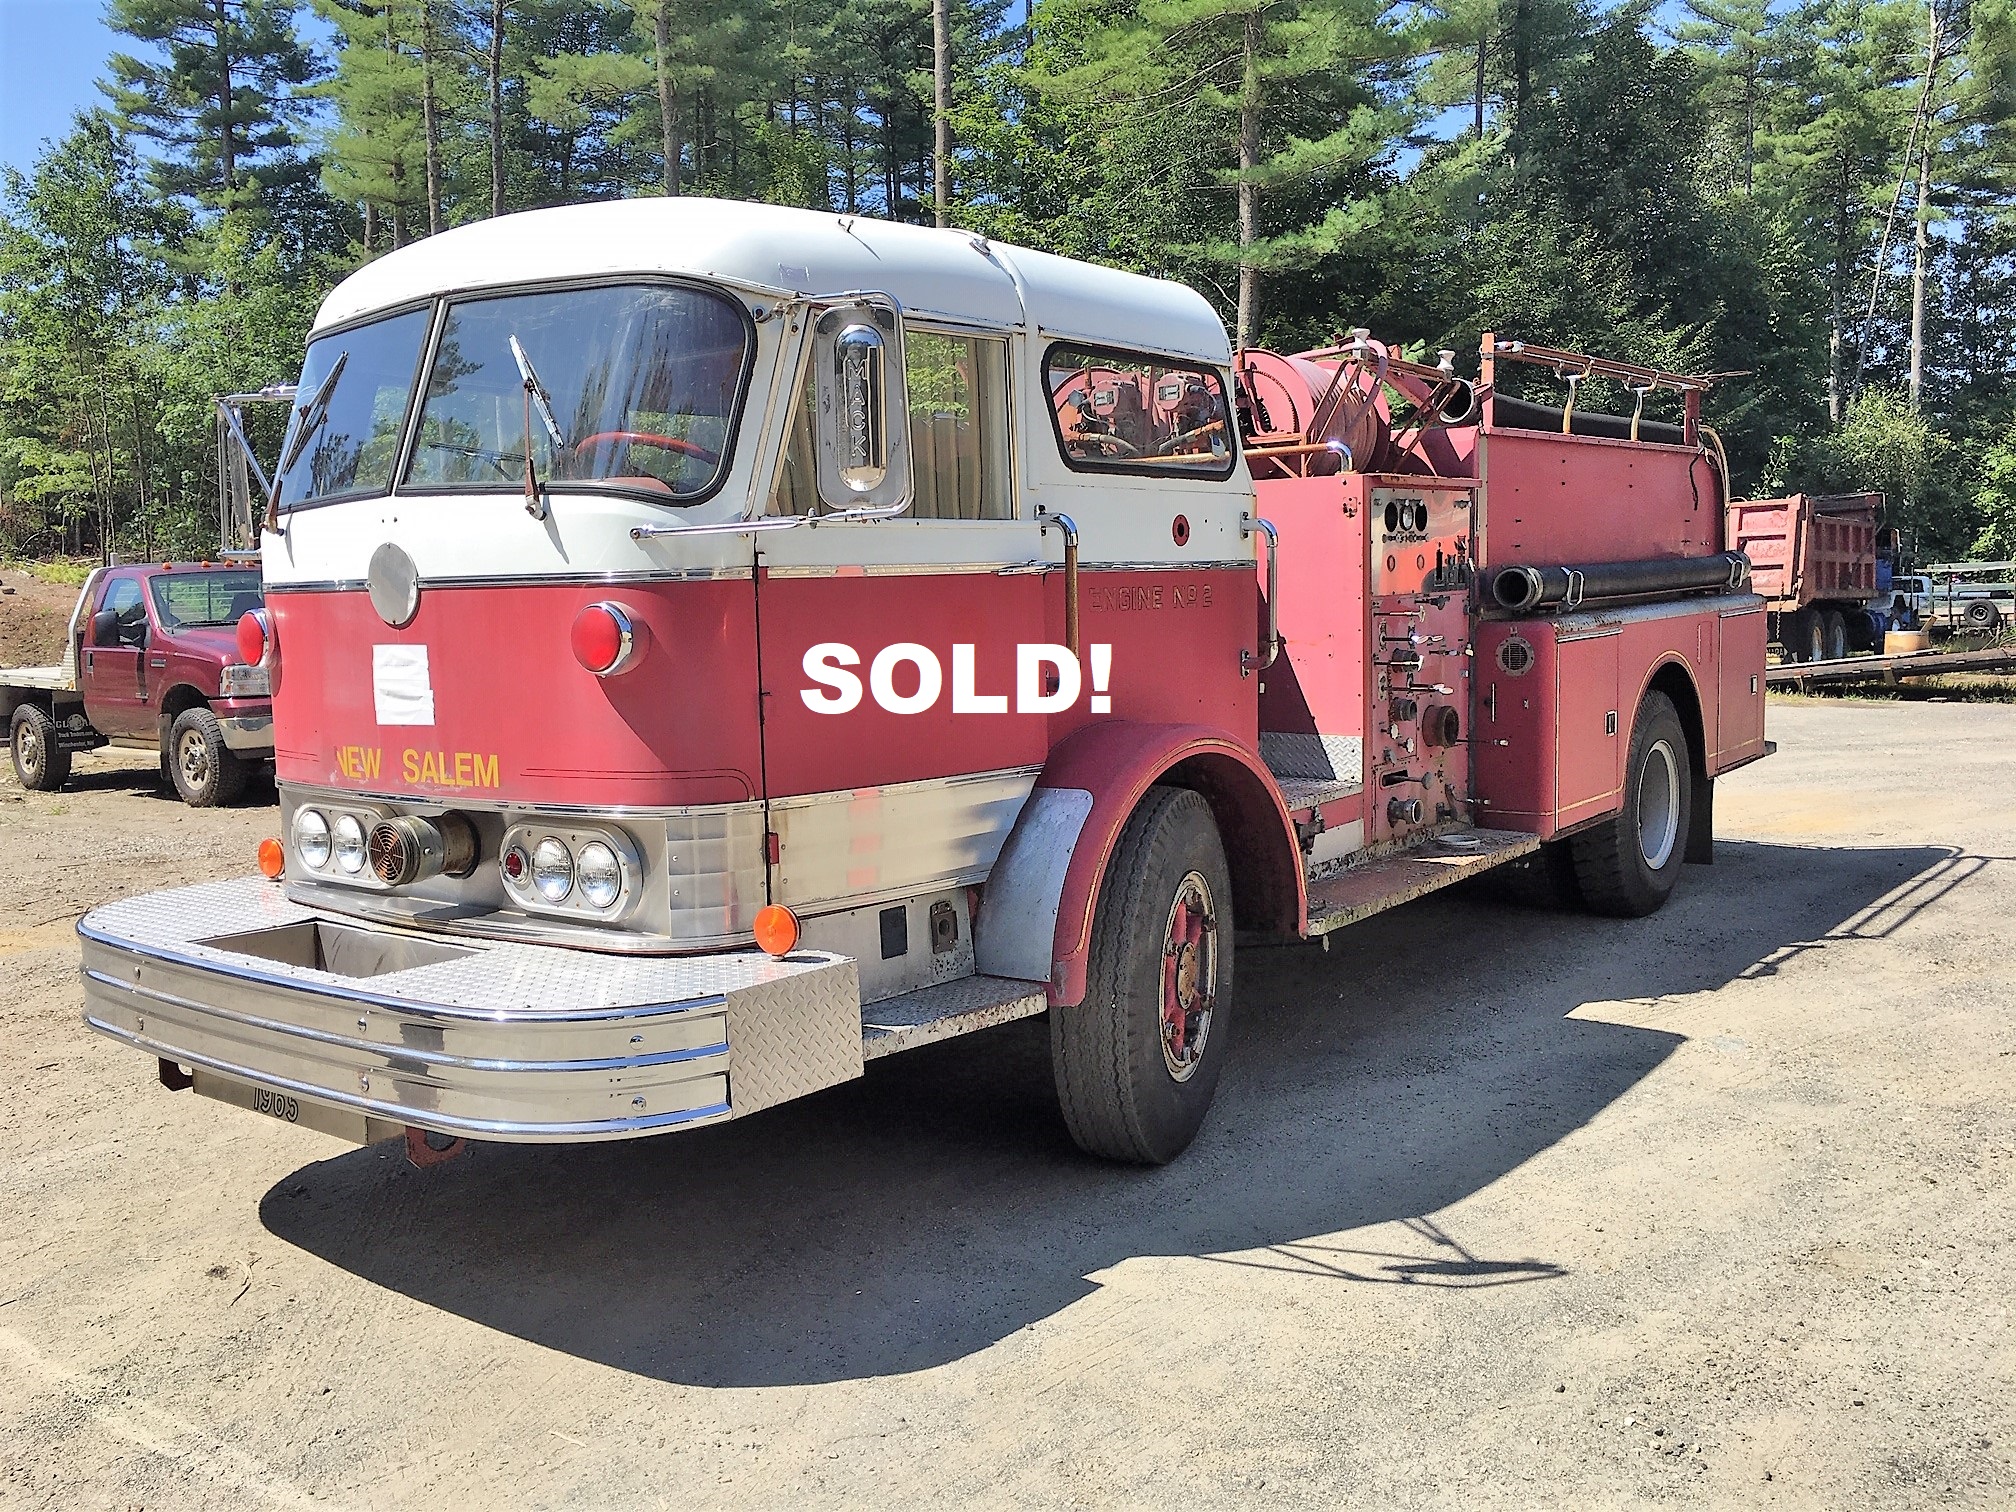 1965 Mack C pumper truck for sale.